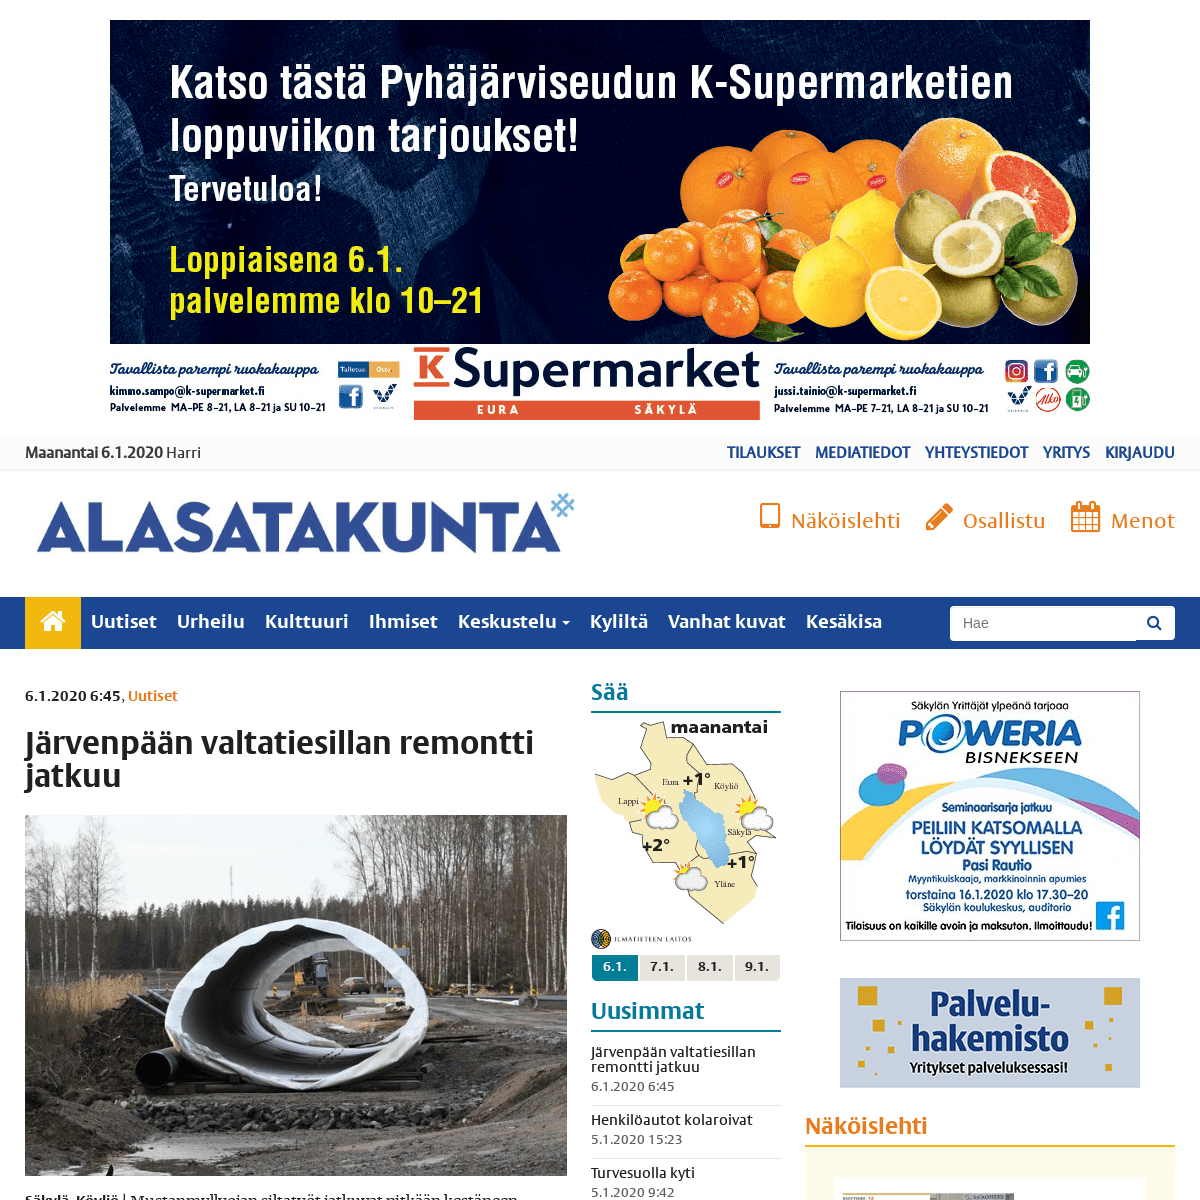 A complete backup of alasatakunta.fi